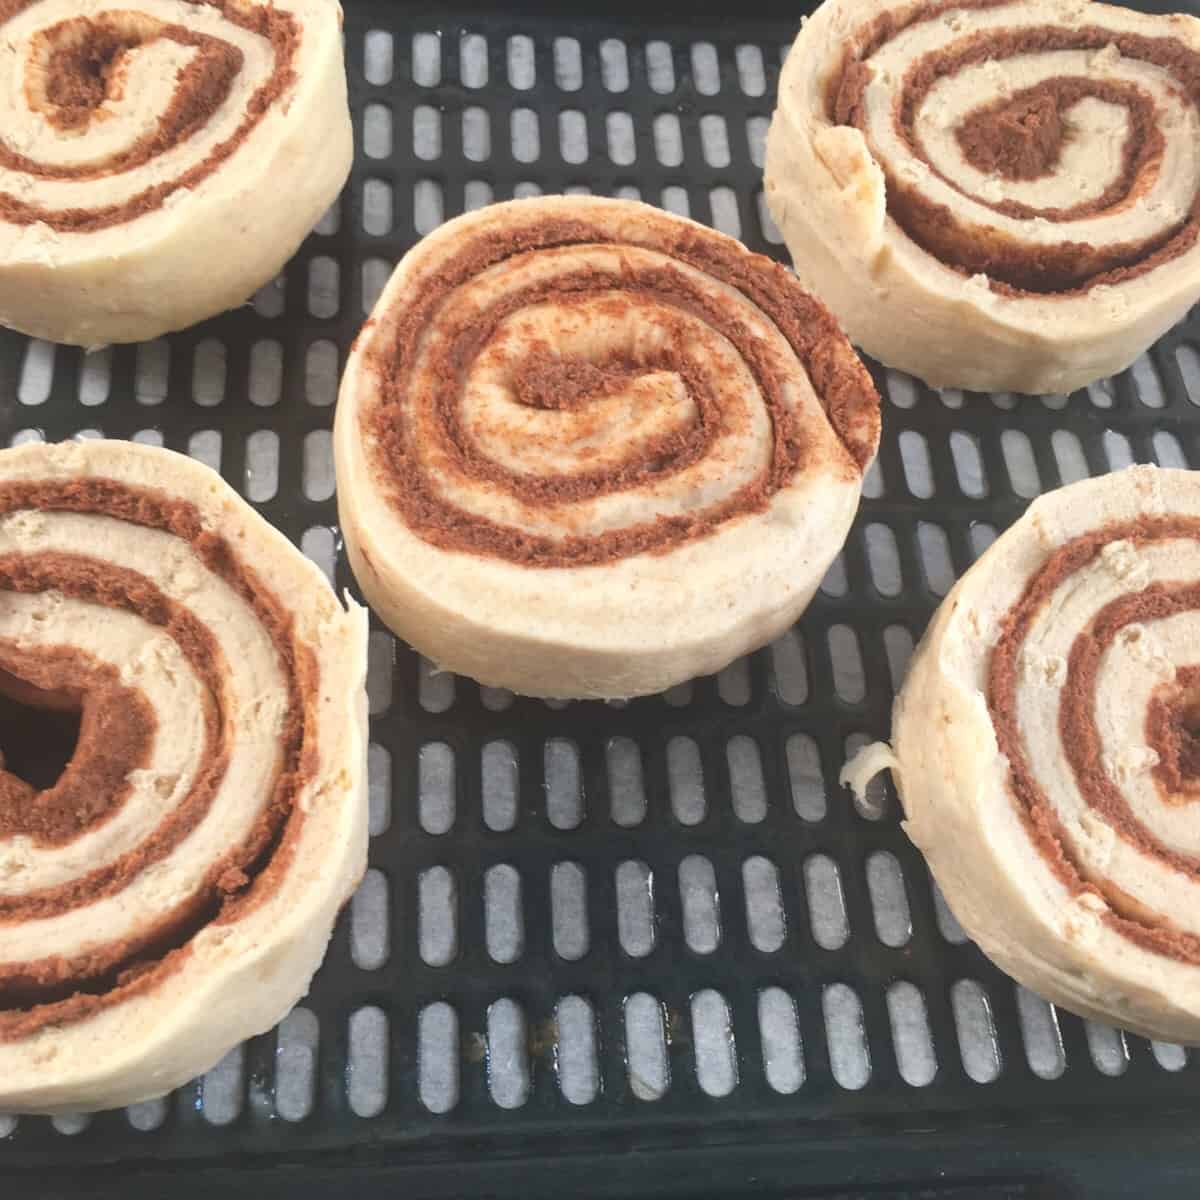 cinnamon rolls in air fryer